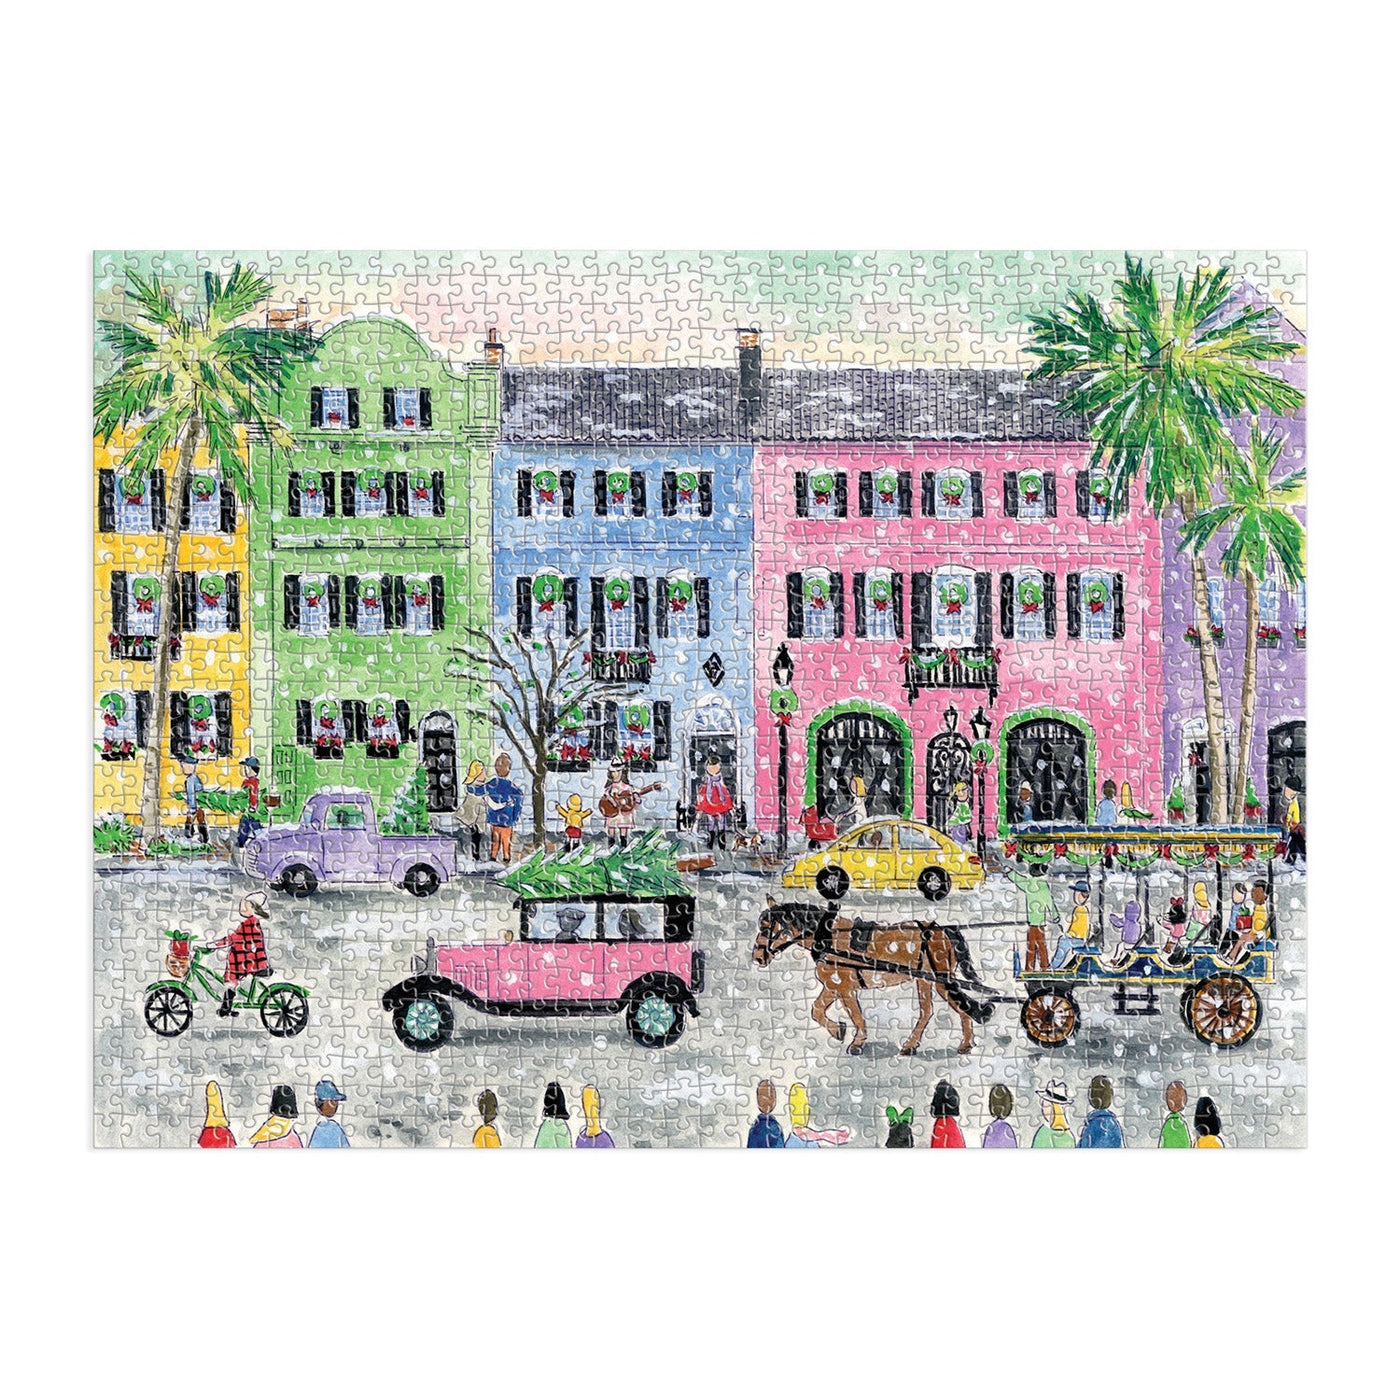 Michael Storrings Christmas in Charleston | 1,000 Piece Jigsaw Puzzle